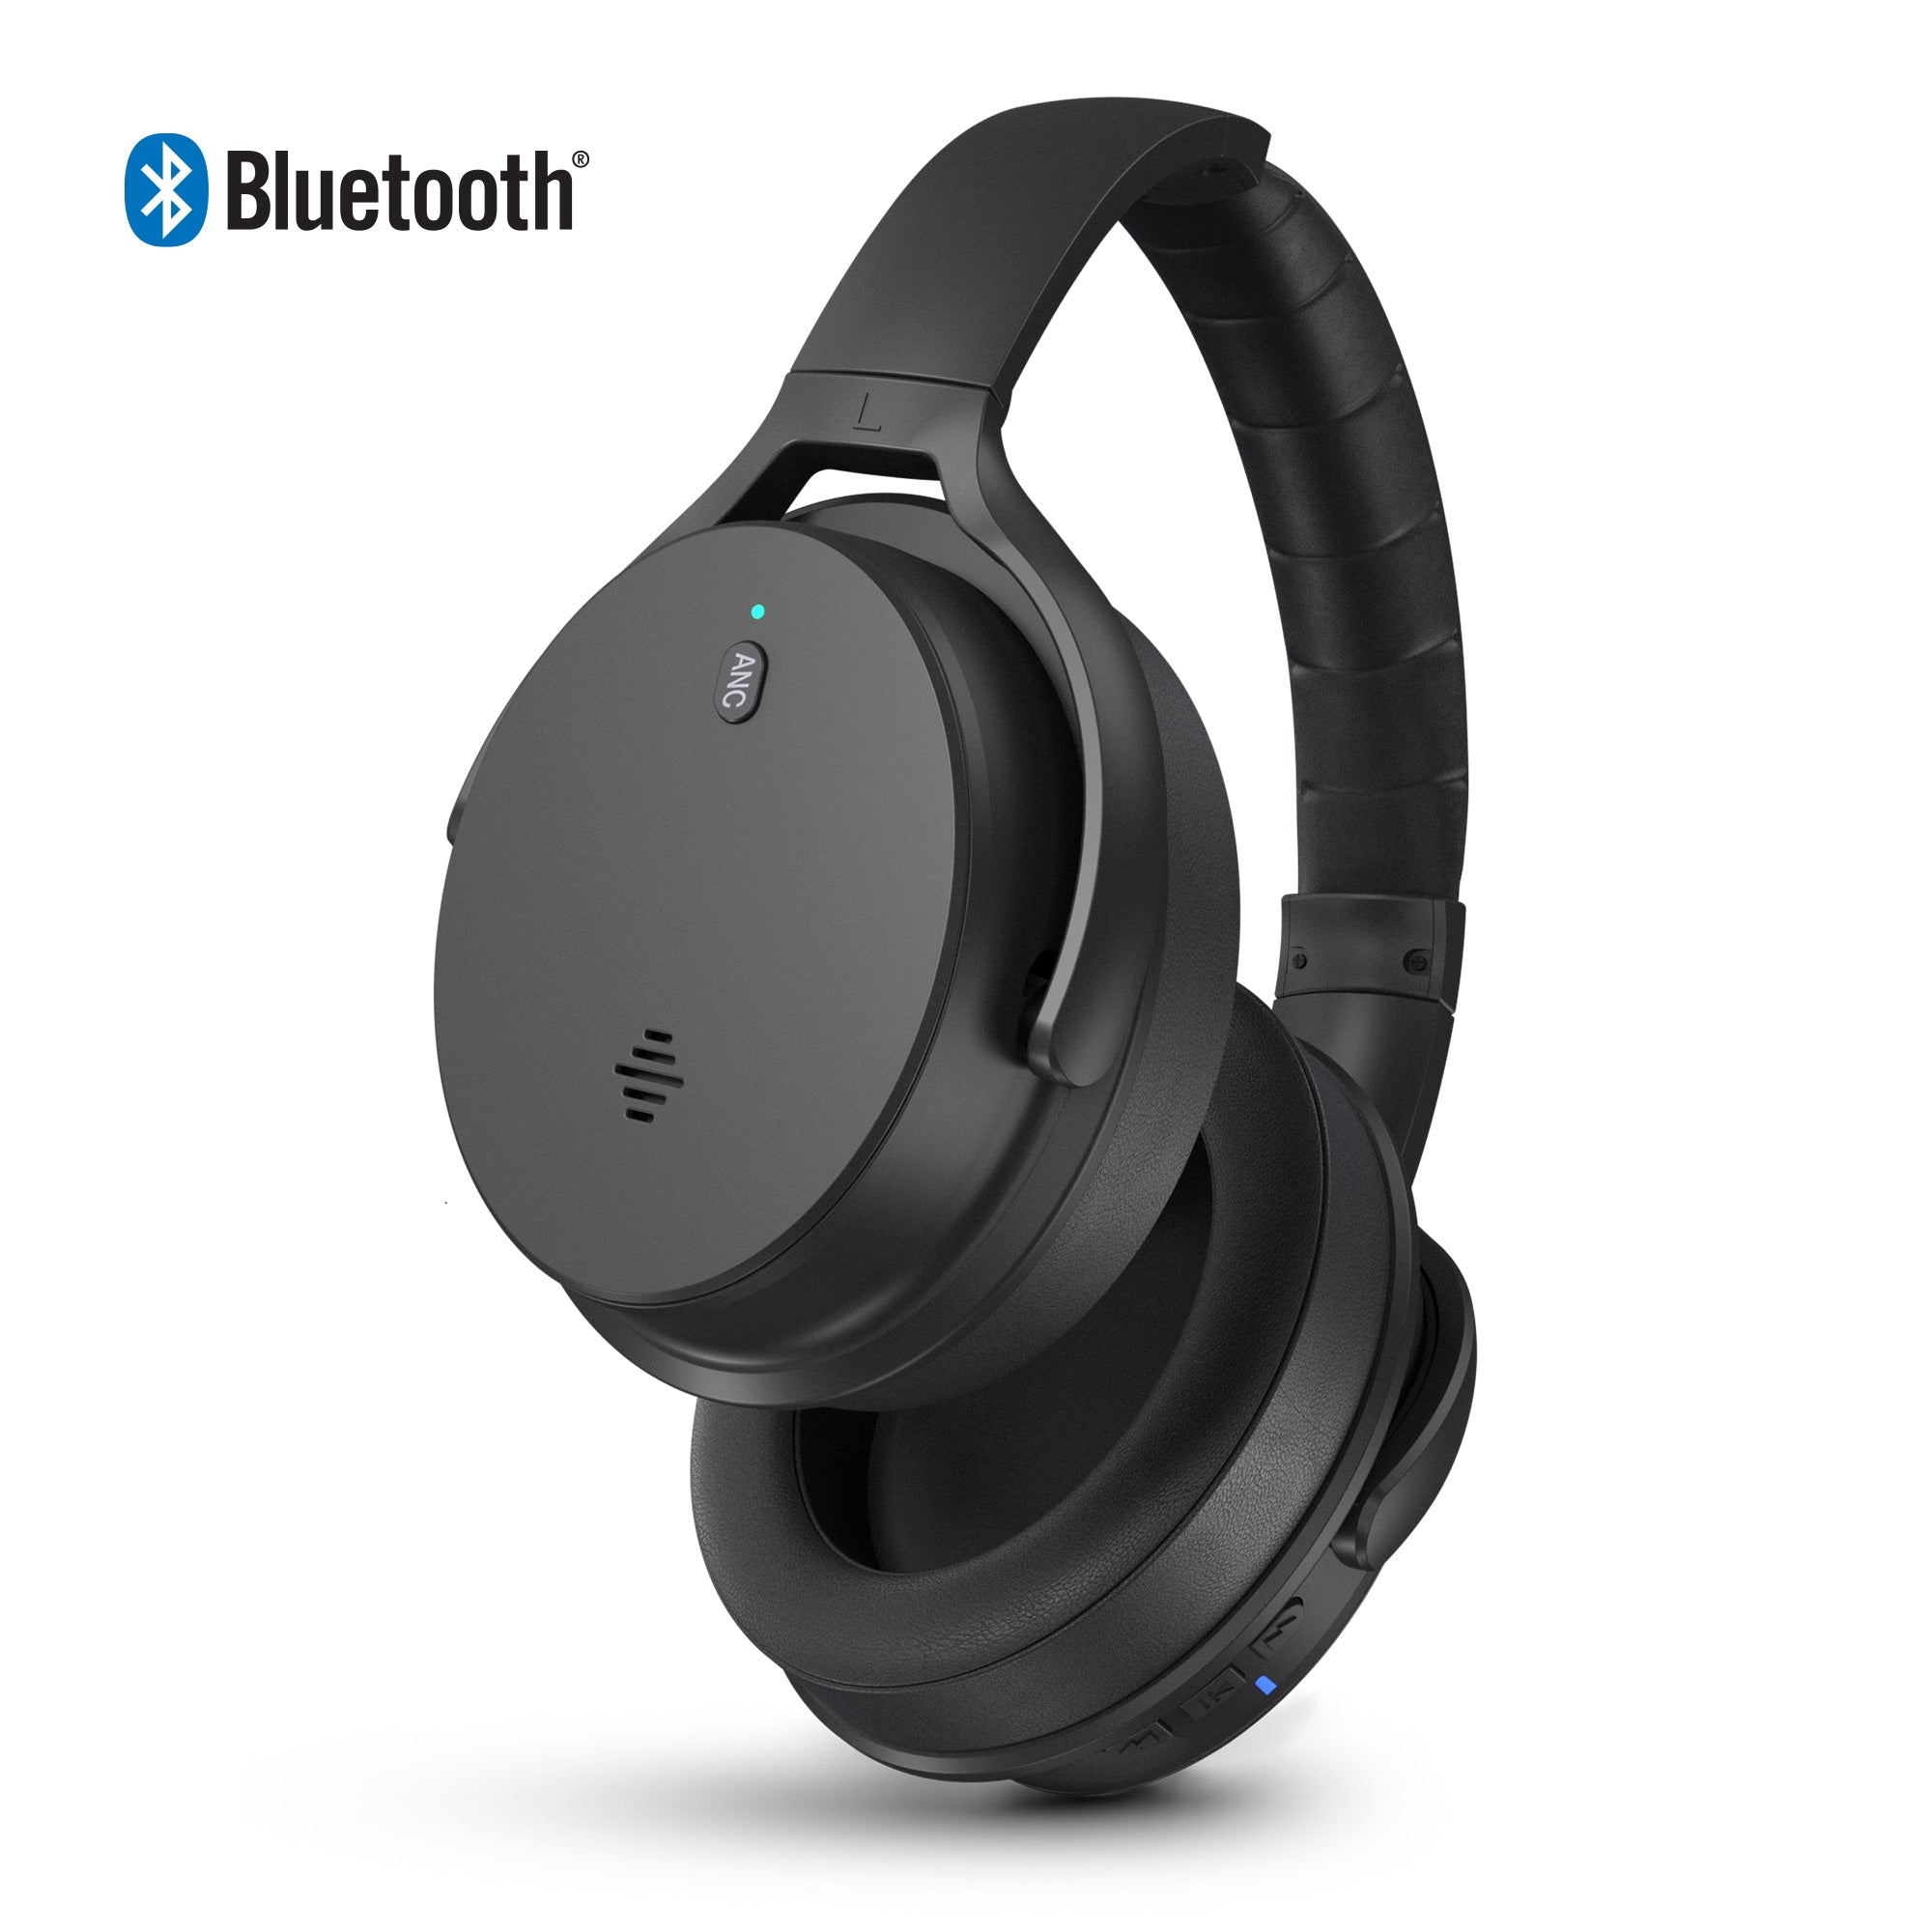 WH-1000XM3 Wireless Noise Cancelling Headphones (Black)